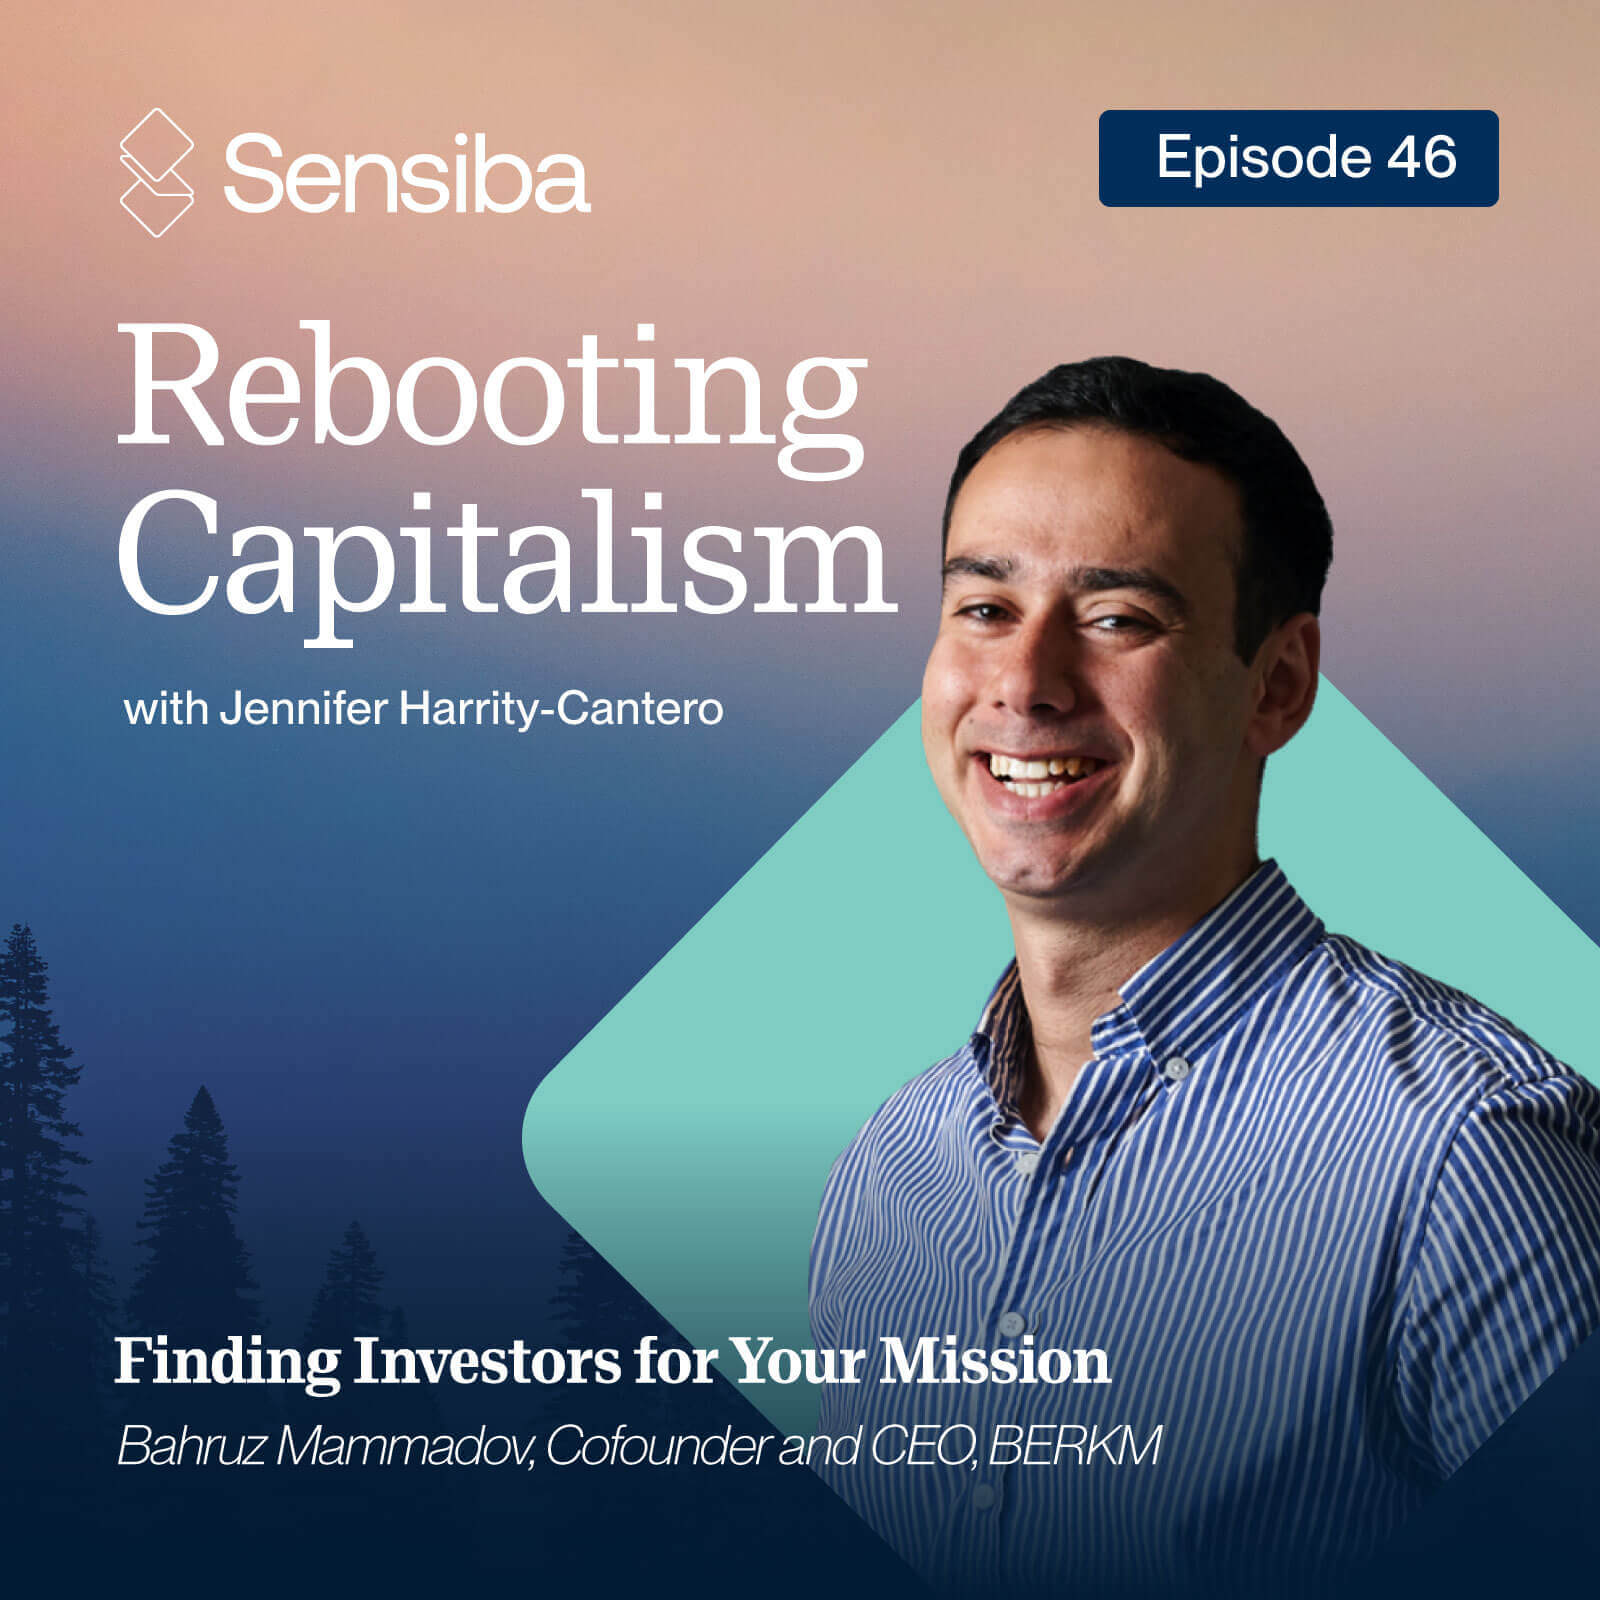 Bahruz Mammadov Episode 46 Rebooting Capitalism